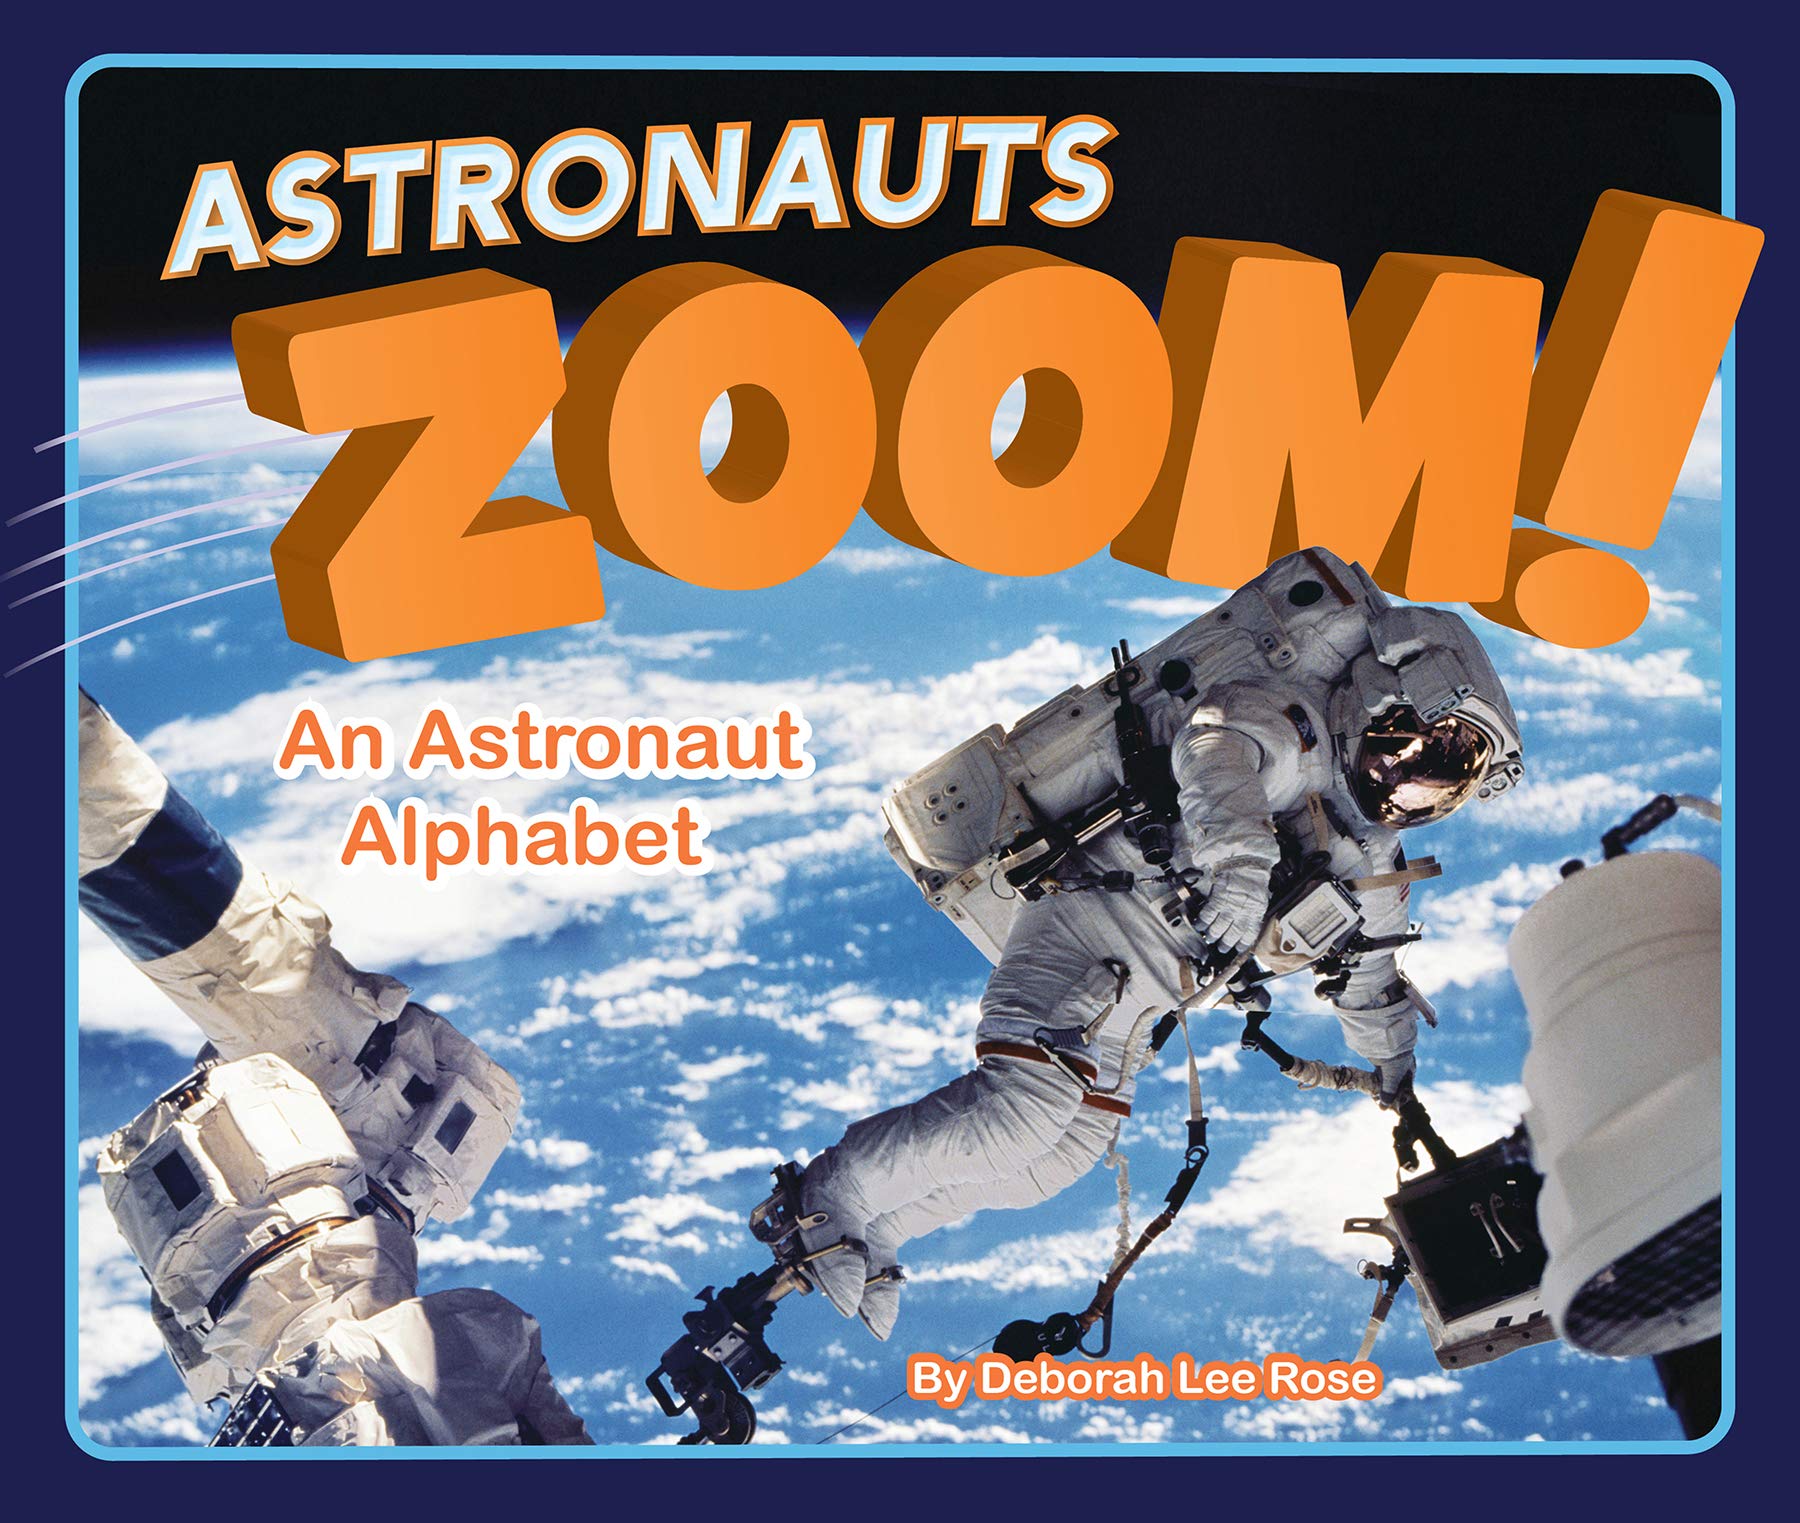 Astronauts Zoom!: An Astronaut Alphabet